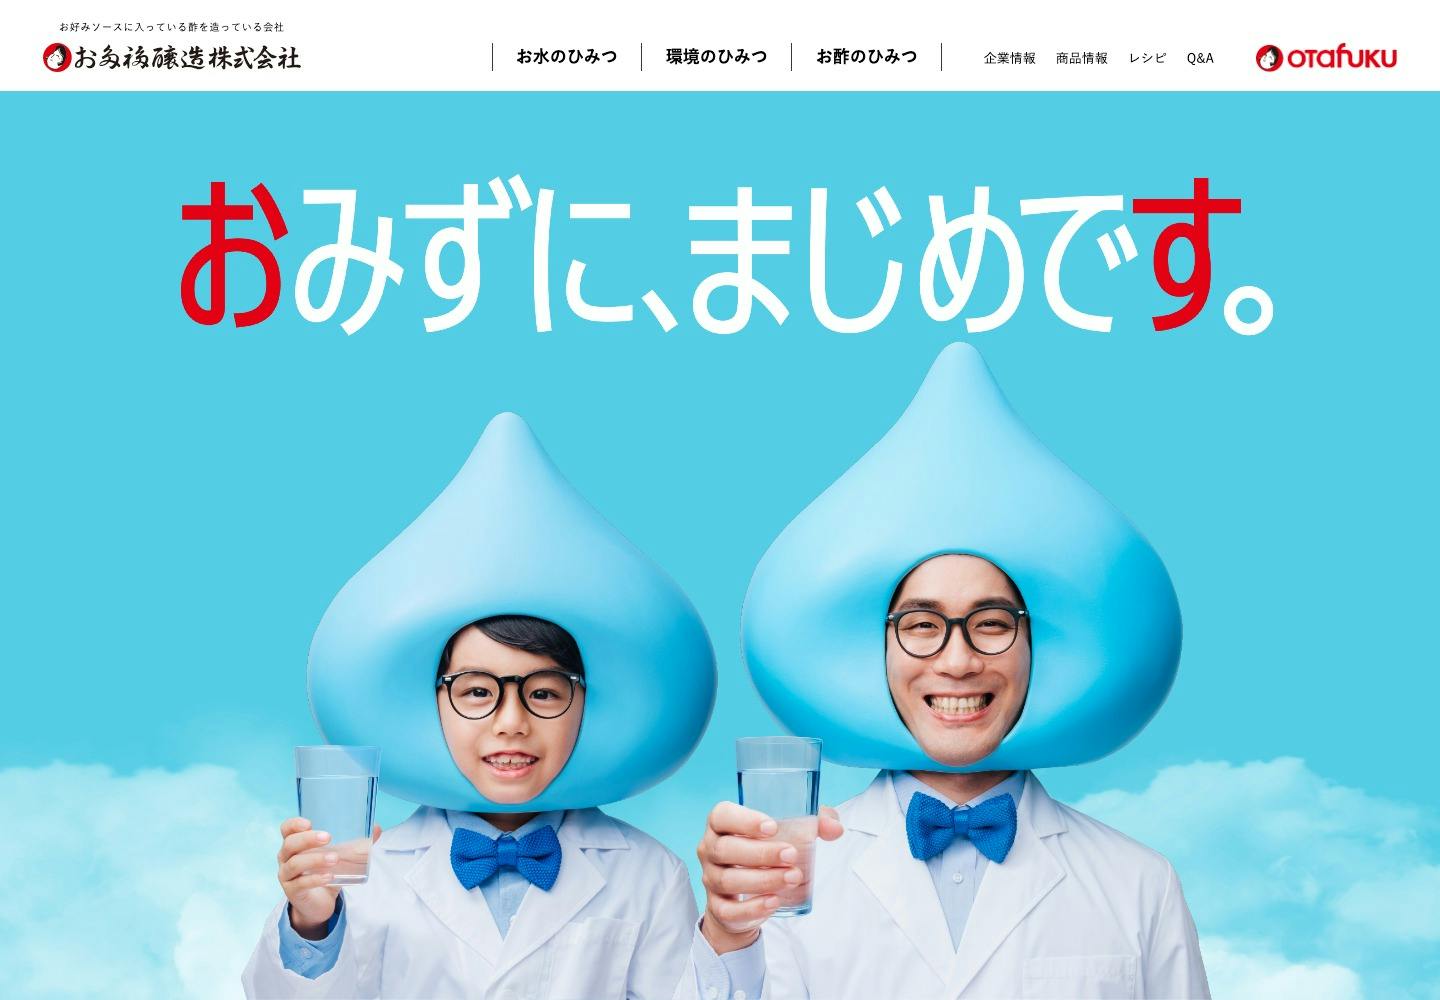 Cover Image for お多福醸造 | オタフクソース株式会社